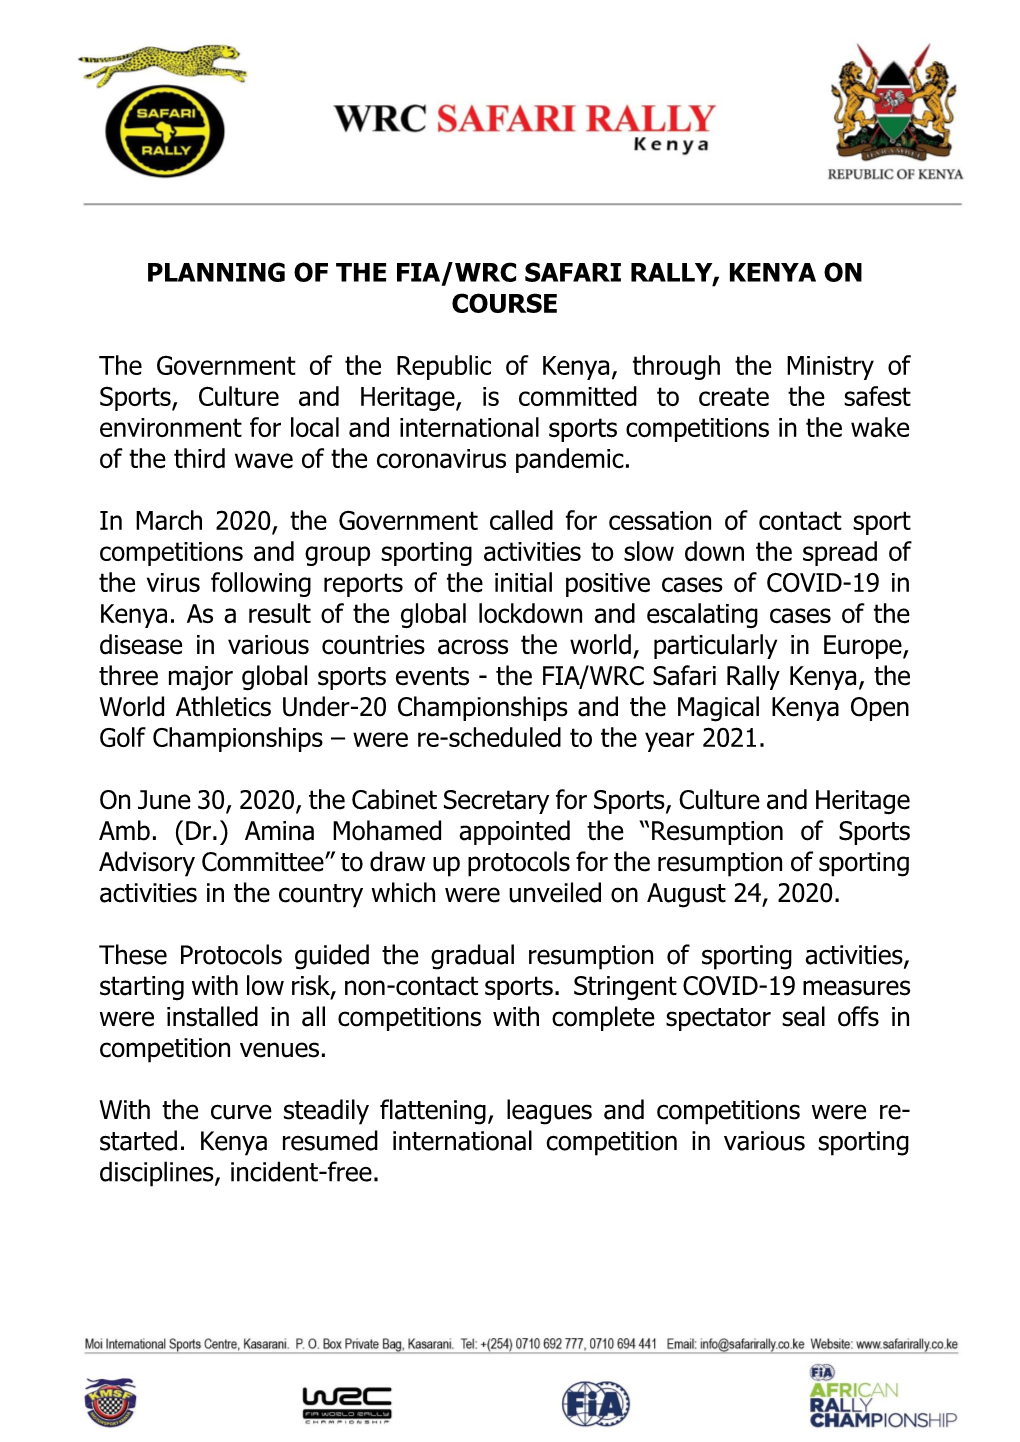 Planning of the Fia/Wrc Safari Rally, Kenya on Course